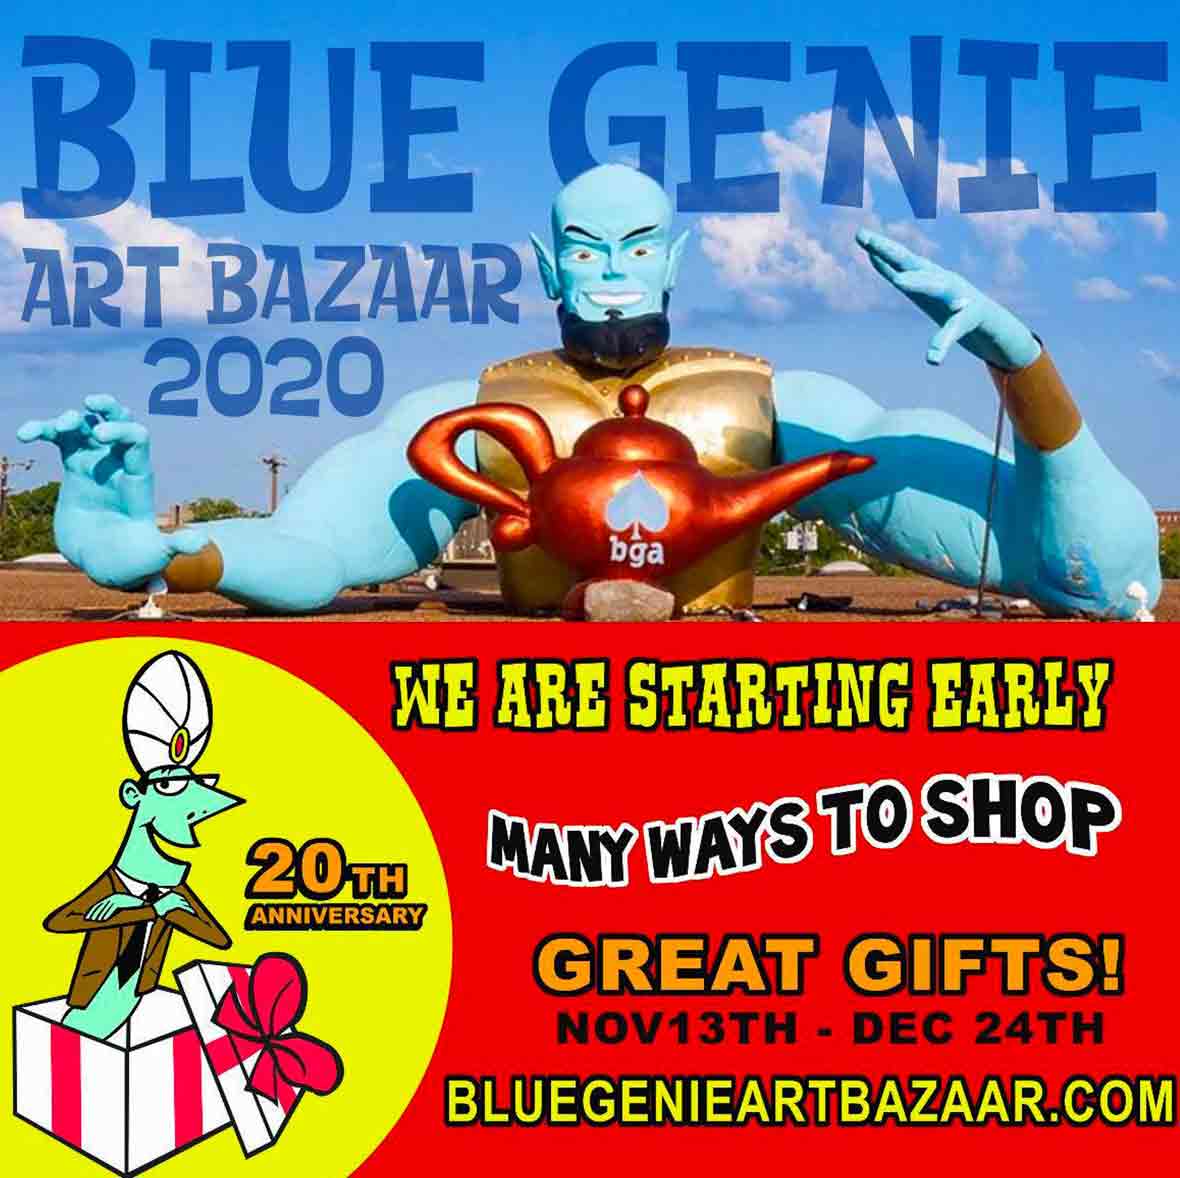 Blue Genie Art Bazaar 2020 